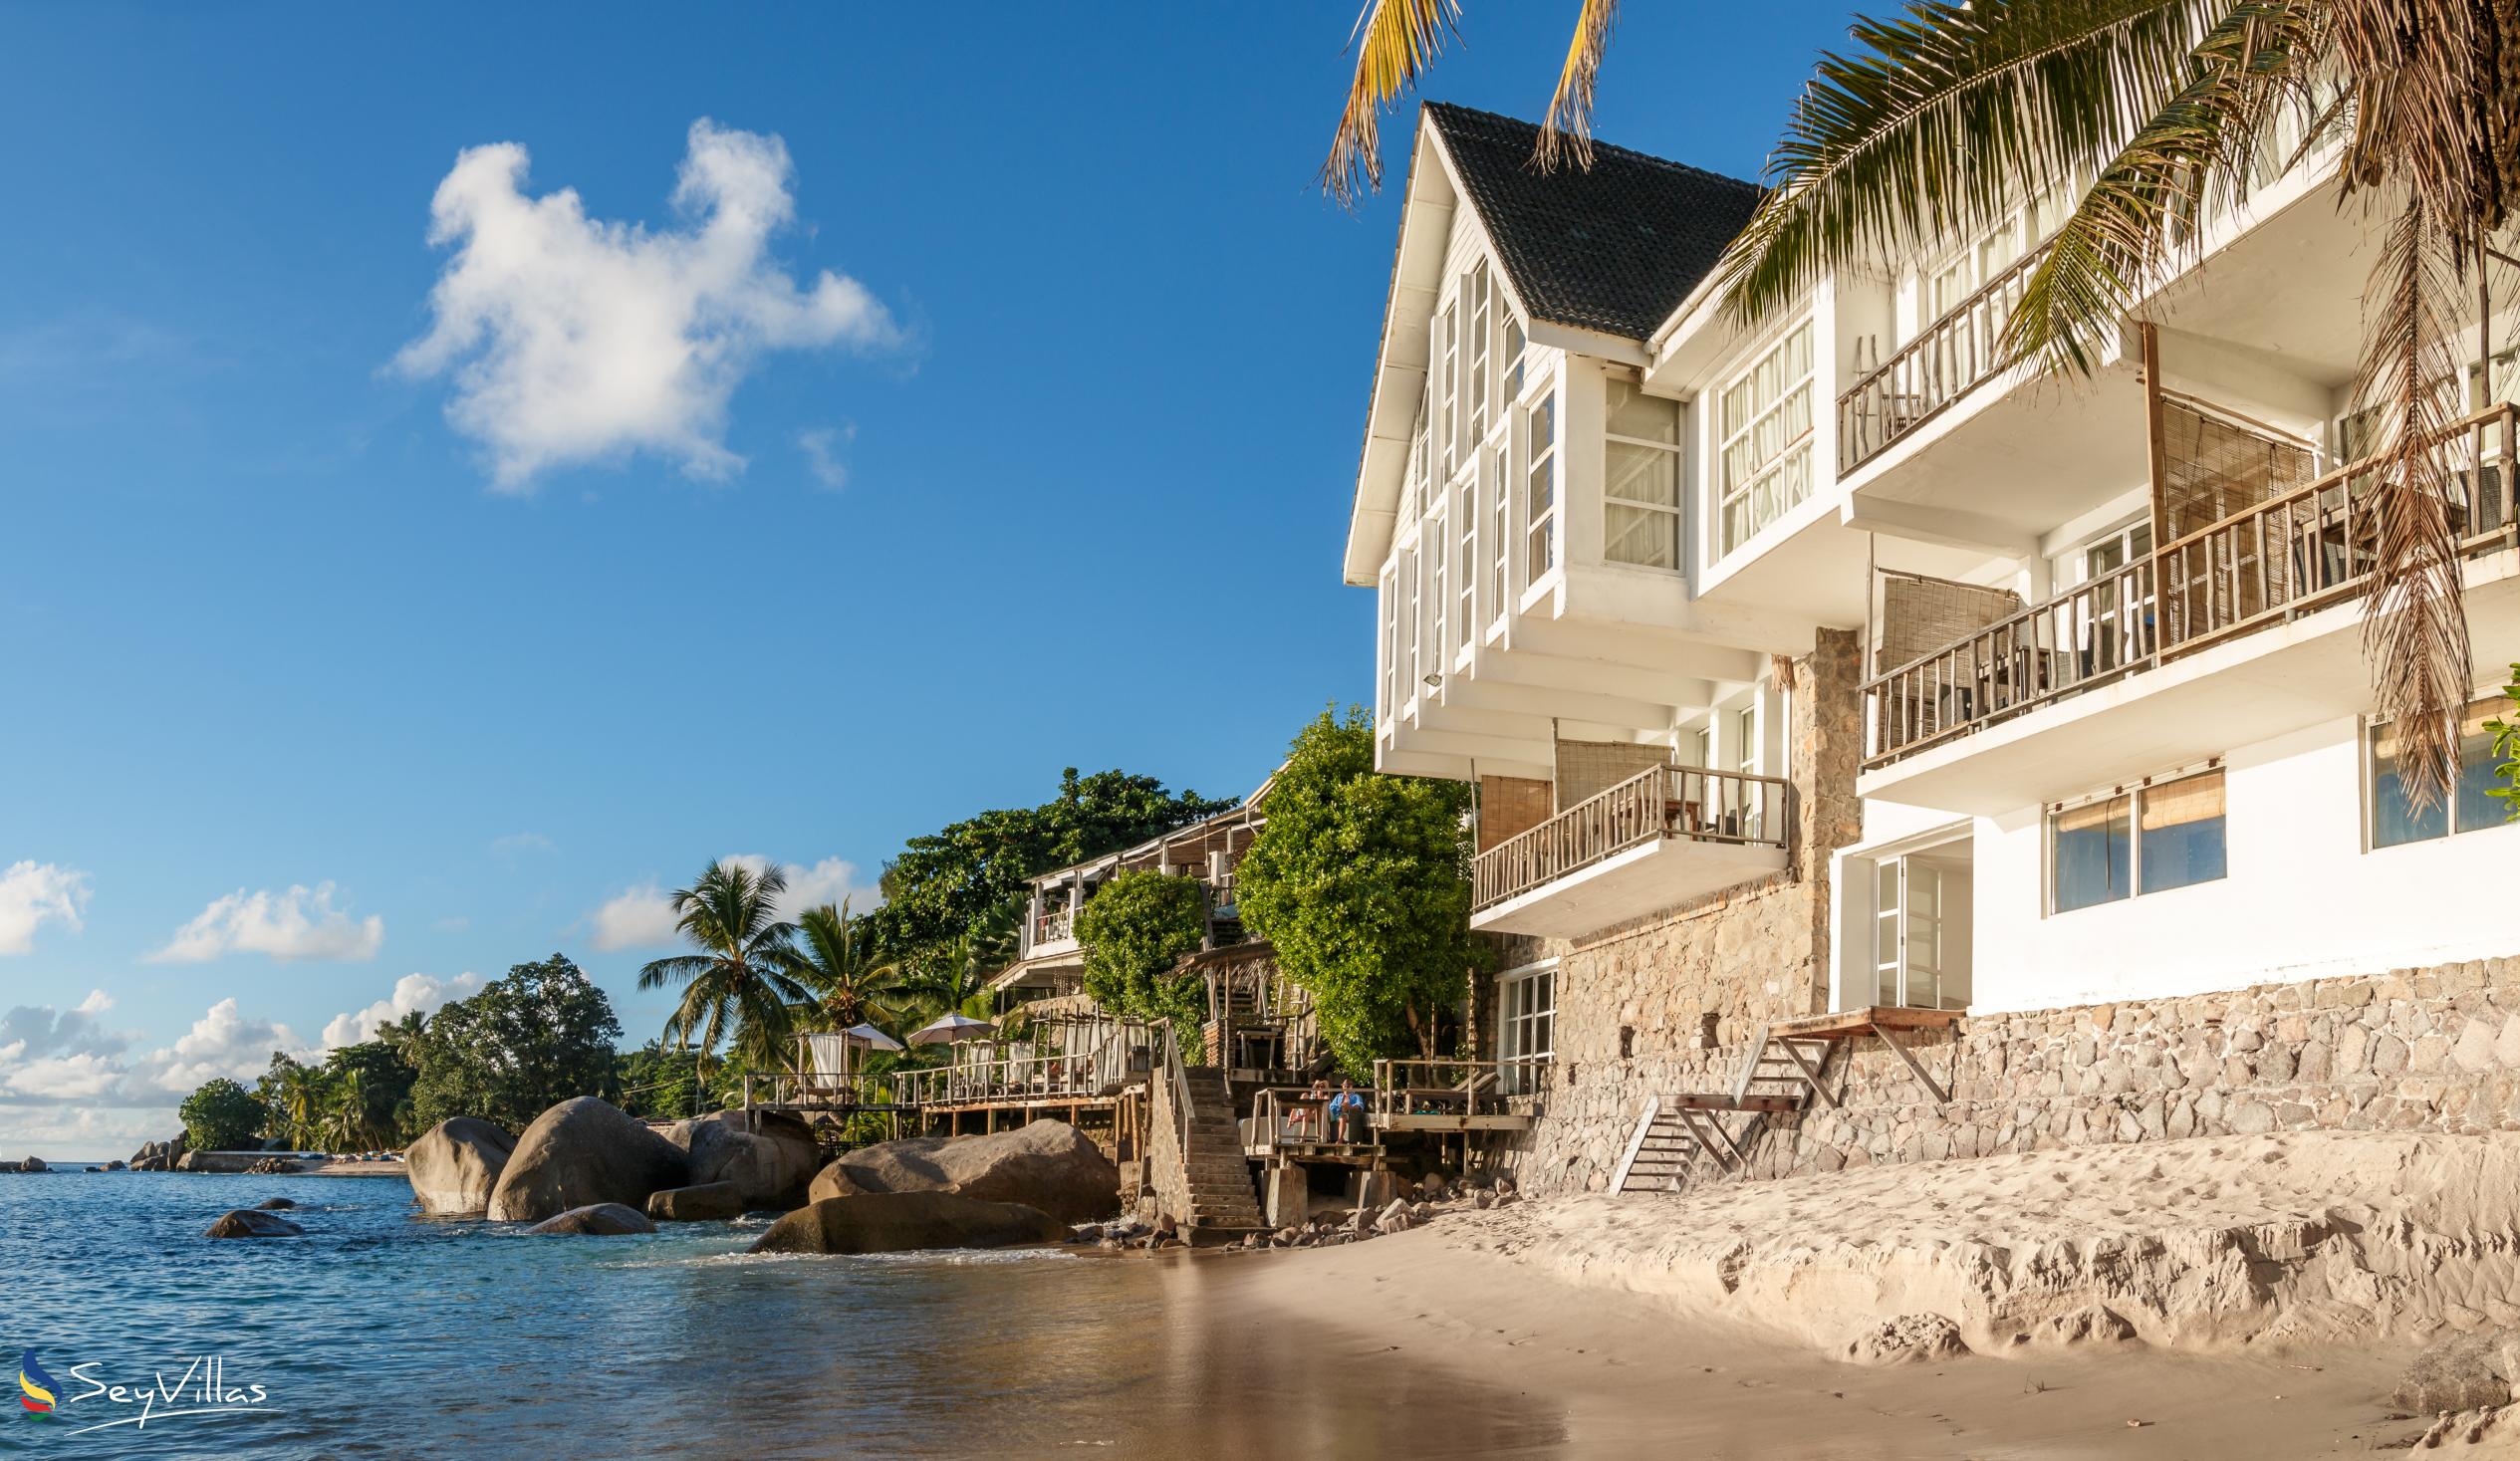 Photo 1: Bliss Hotel - Outdoor area - Mahé (Seychelles)